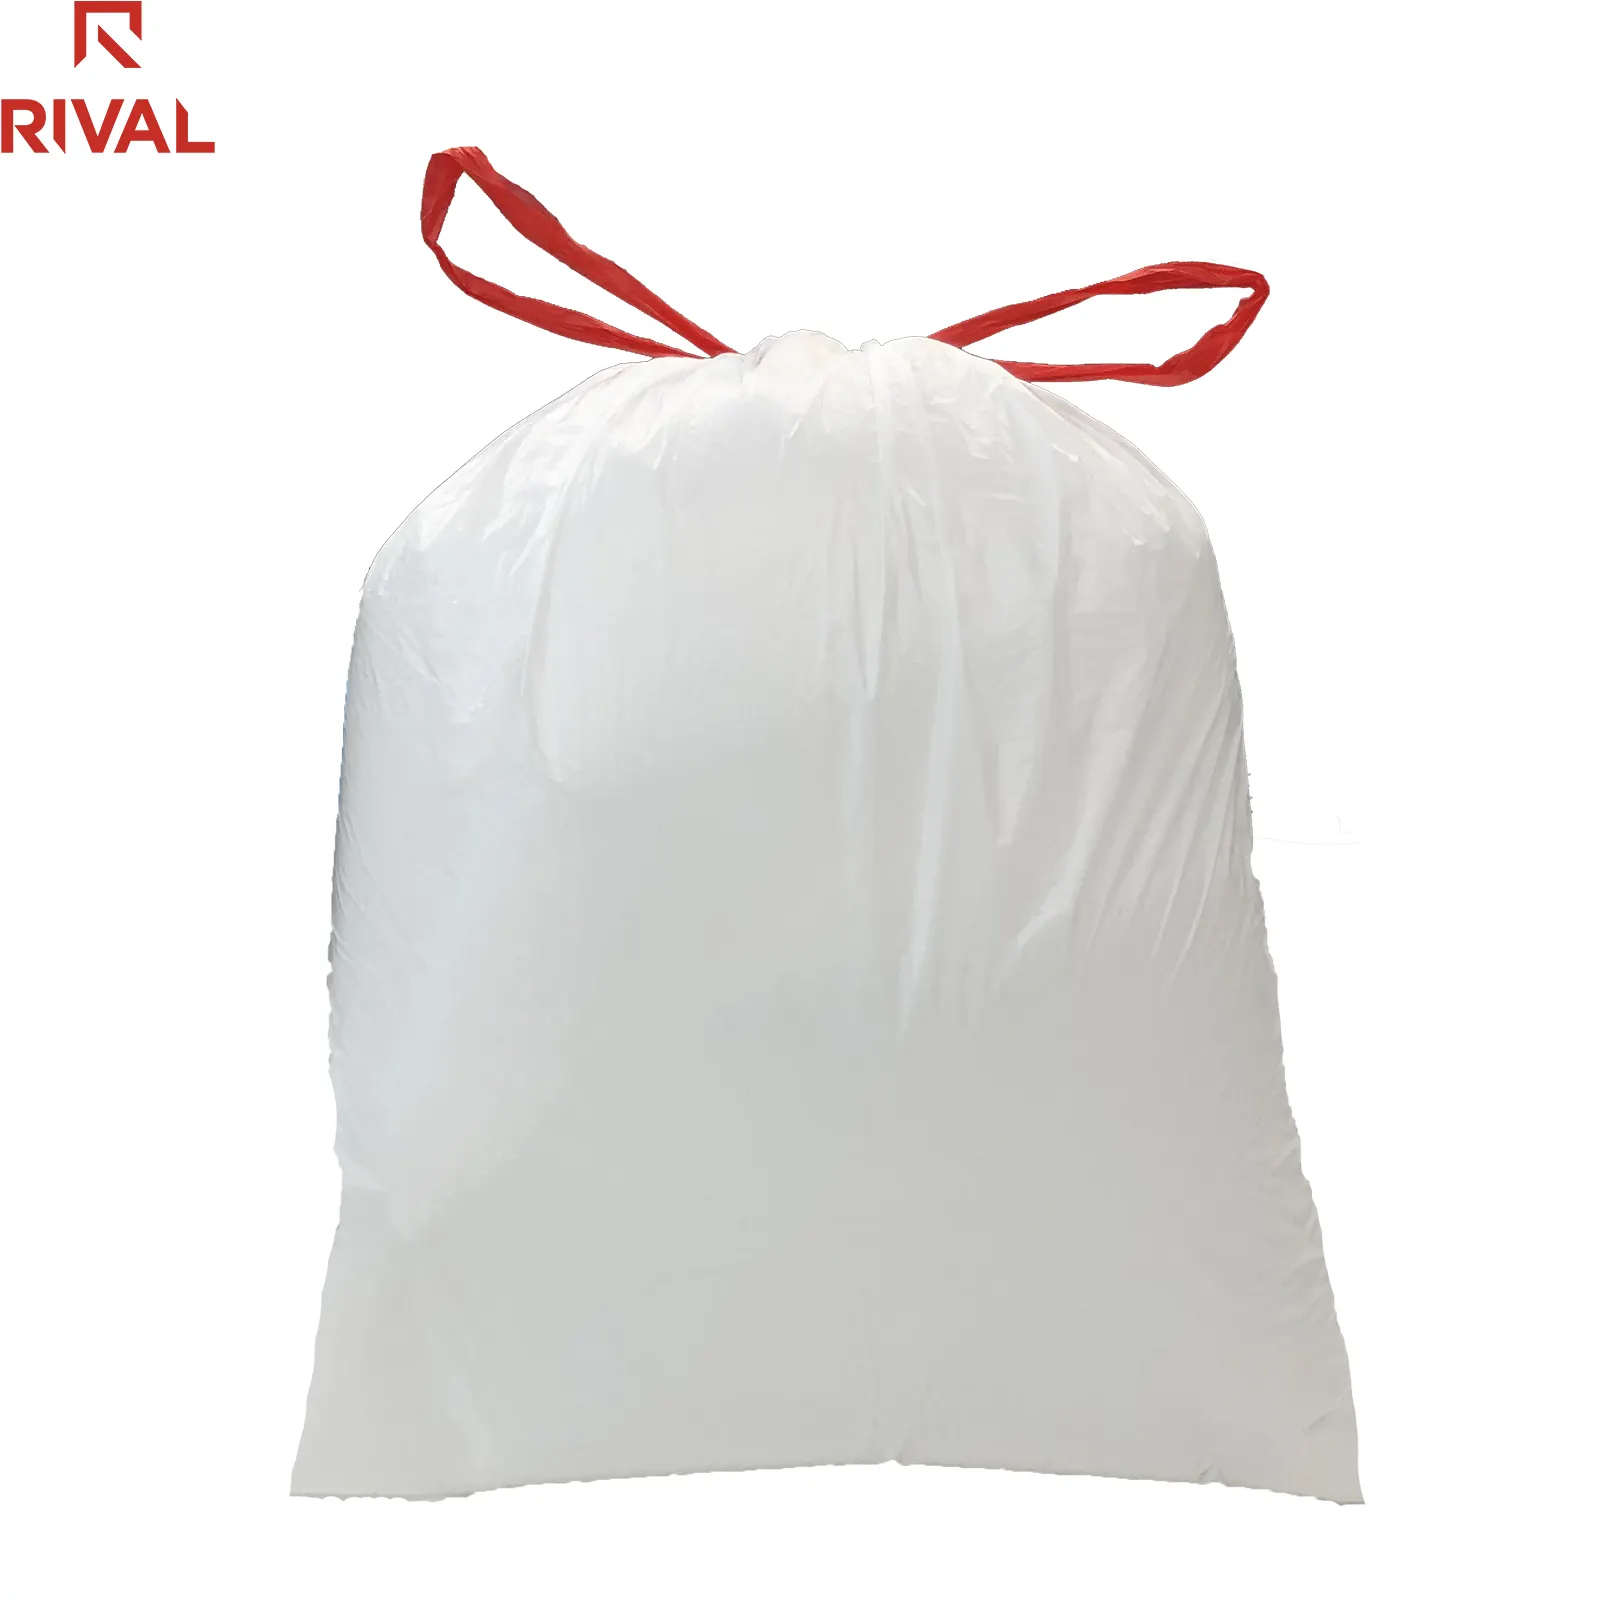 120 Liter Bags On Roll Trash 120l High Quality 2 Mil Super Big Capacity 100% Biodegradable Plastic Black Garbage Bags Refuse Bag